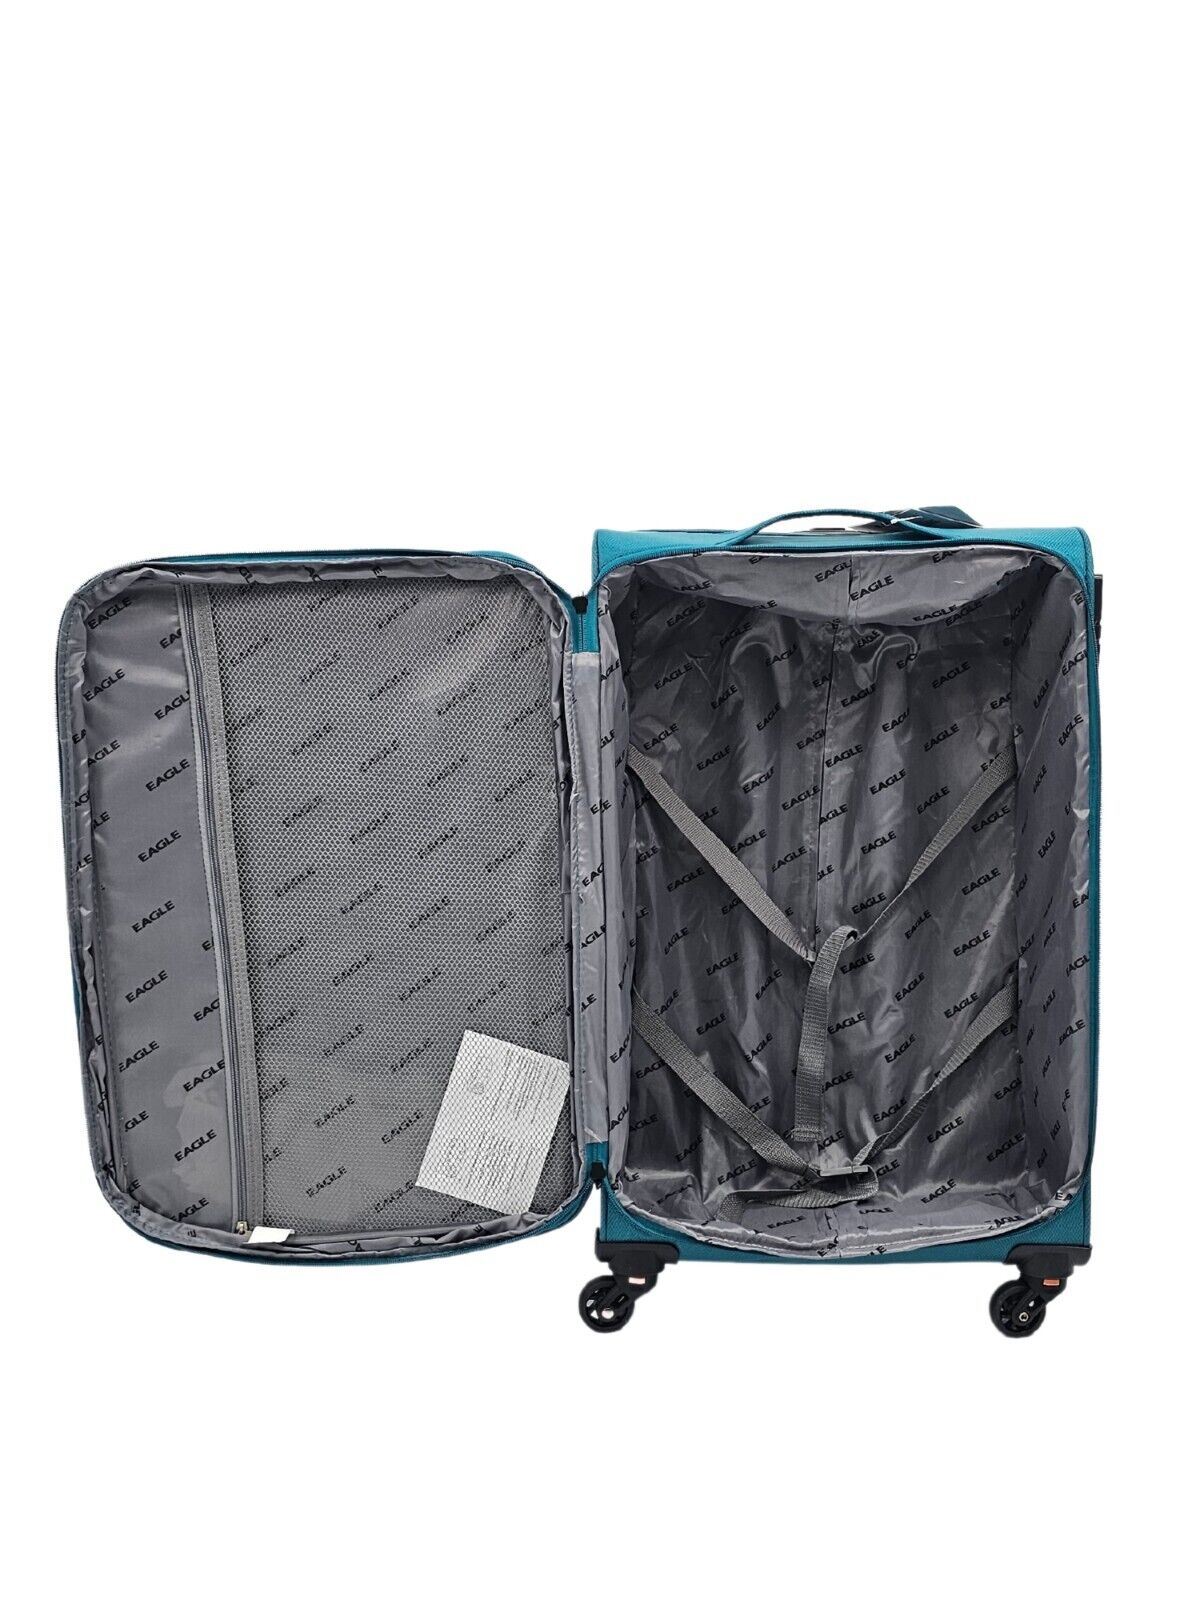 Lightweight Soft Teal Blue Suitcases Set 4 Wheel Luggage Travel TSA Cabin